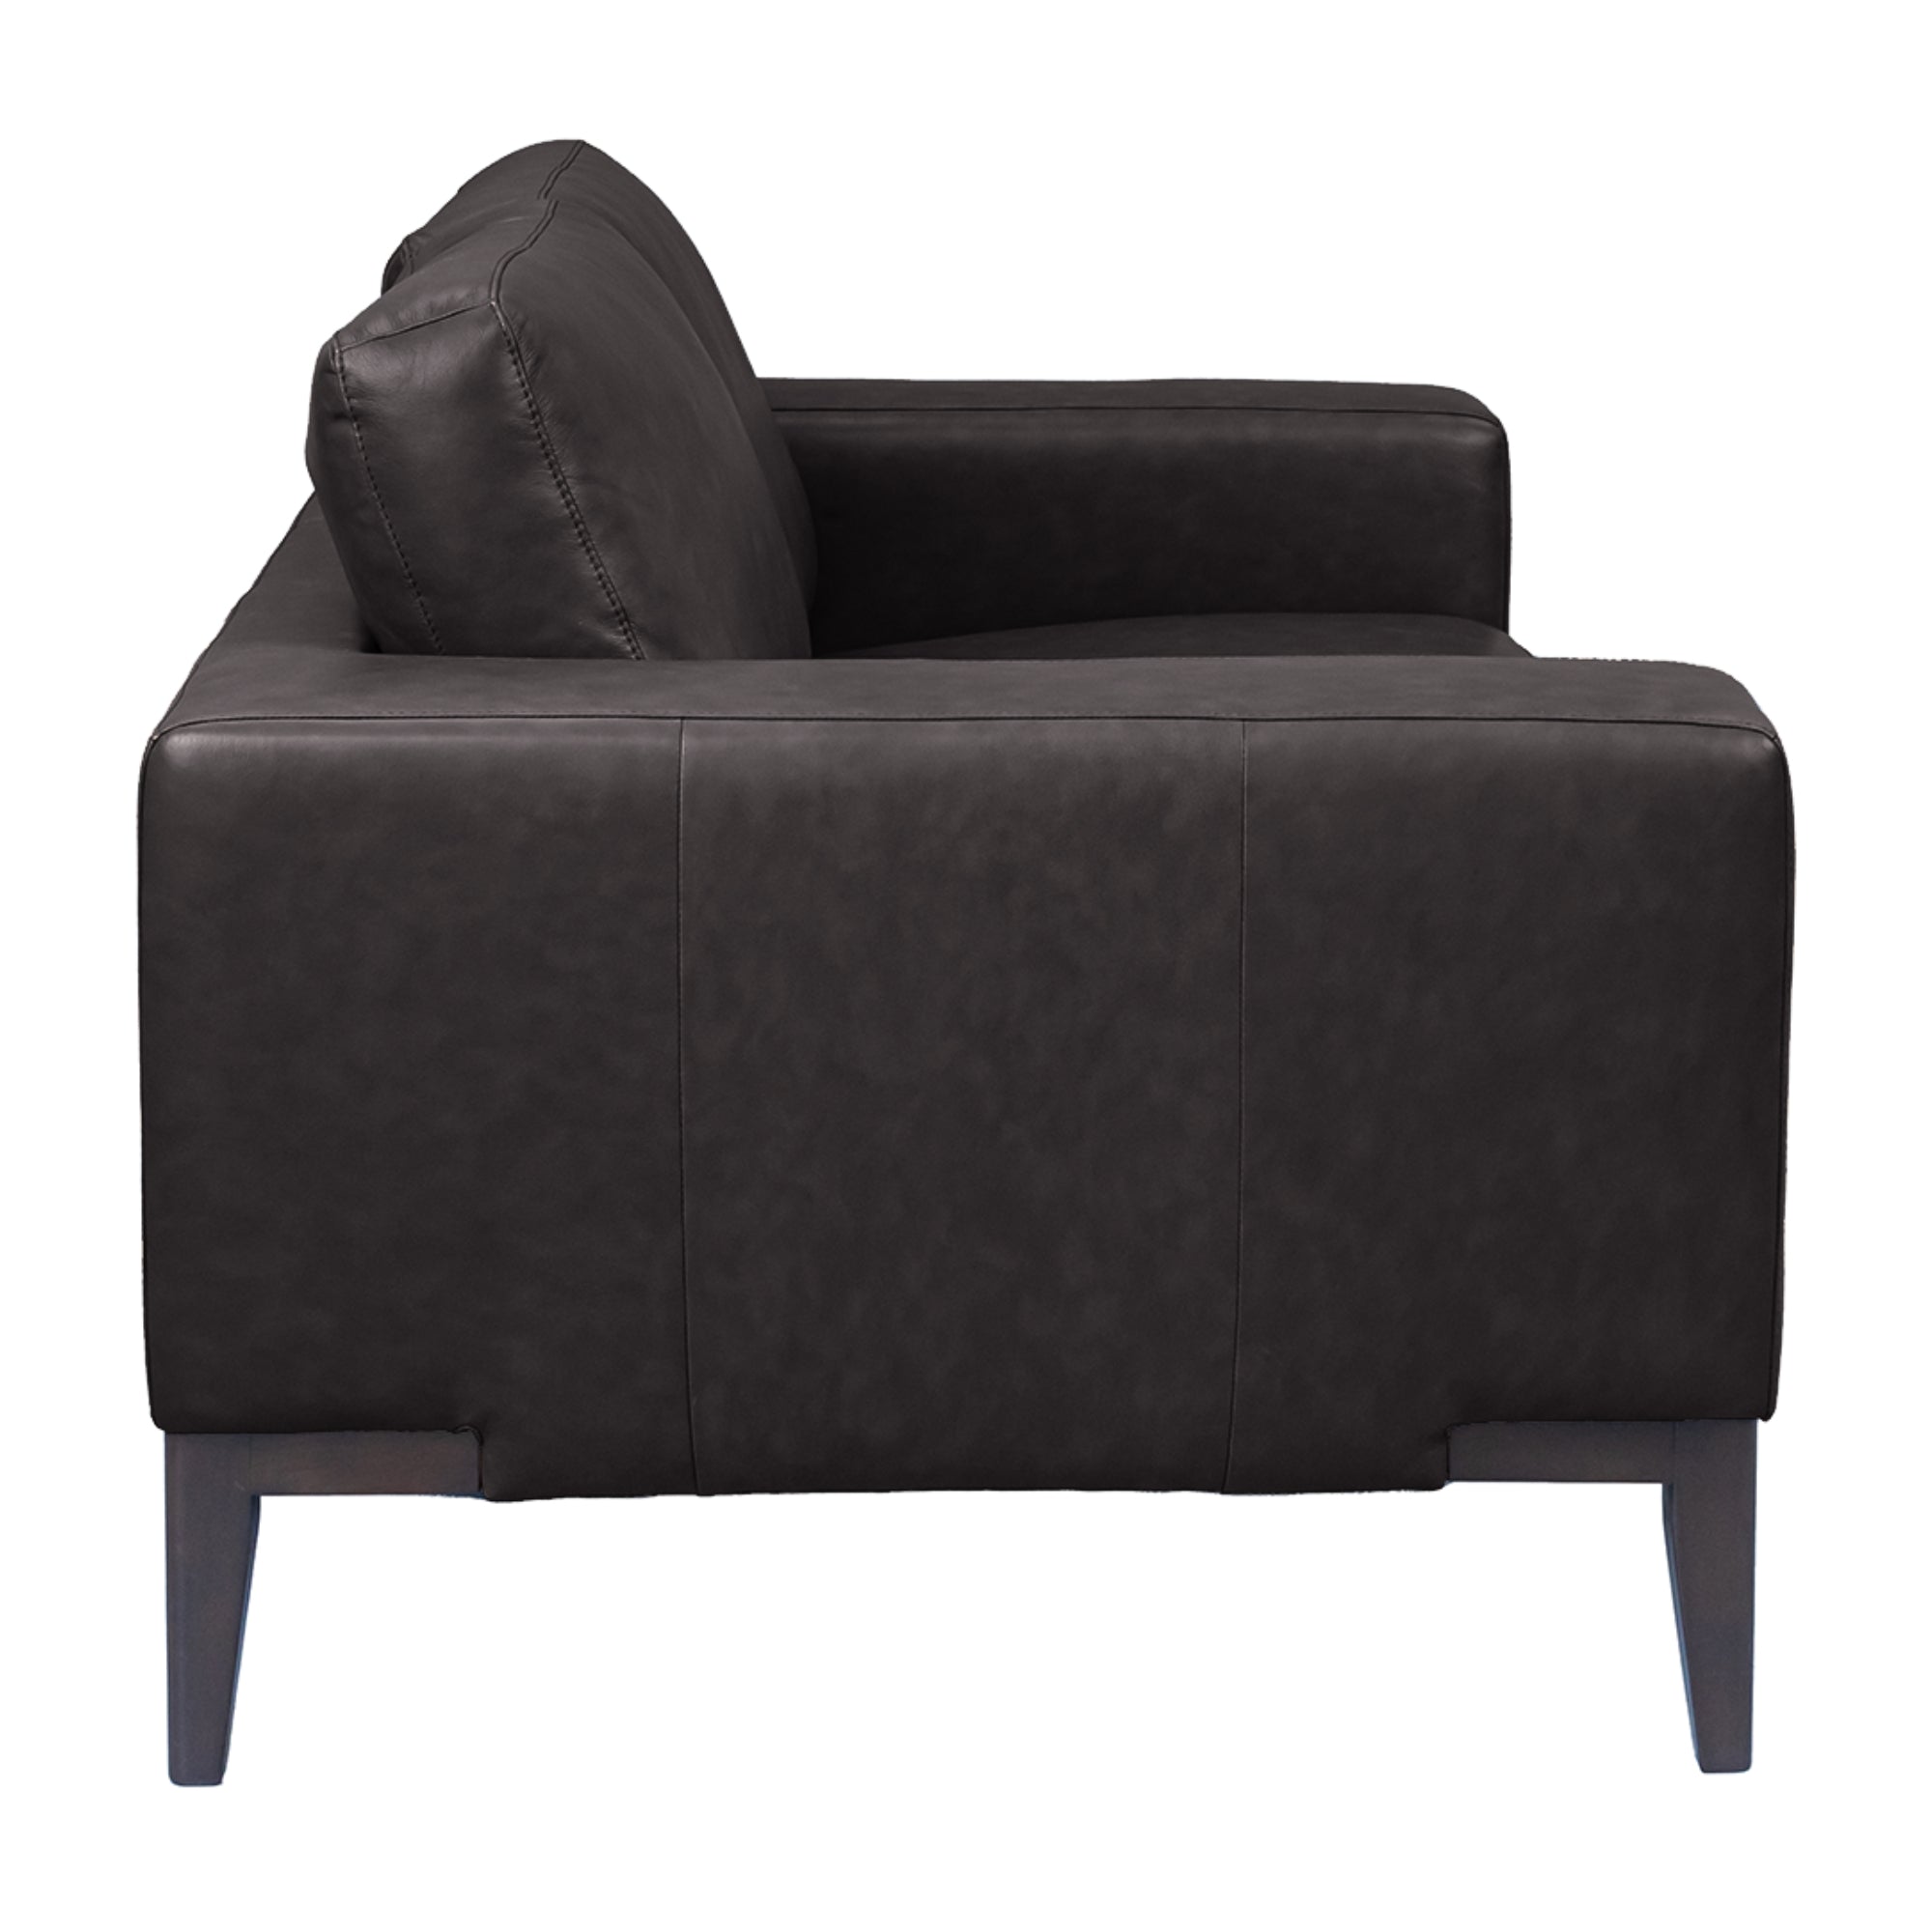 Modern Chocolate Leather Sofa, Wide Arms, 3-Seater, Lorenzo